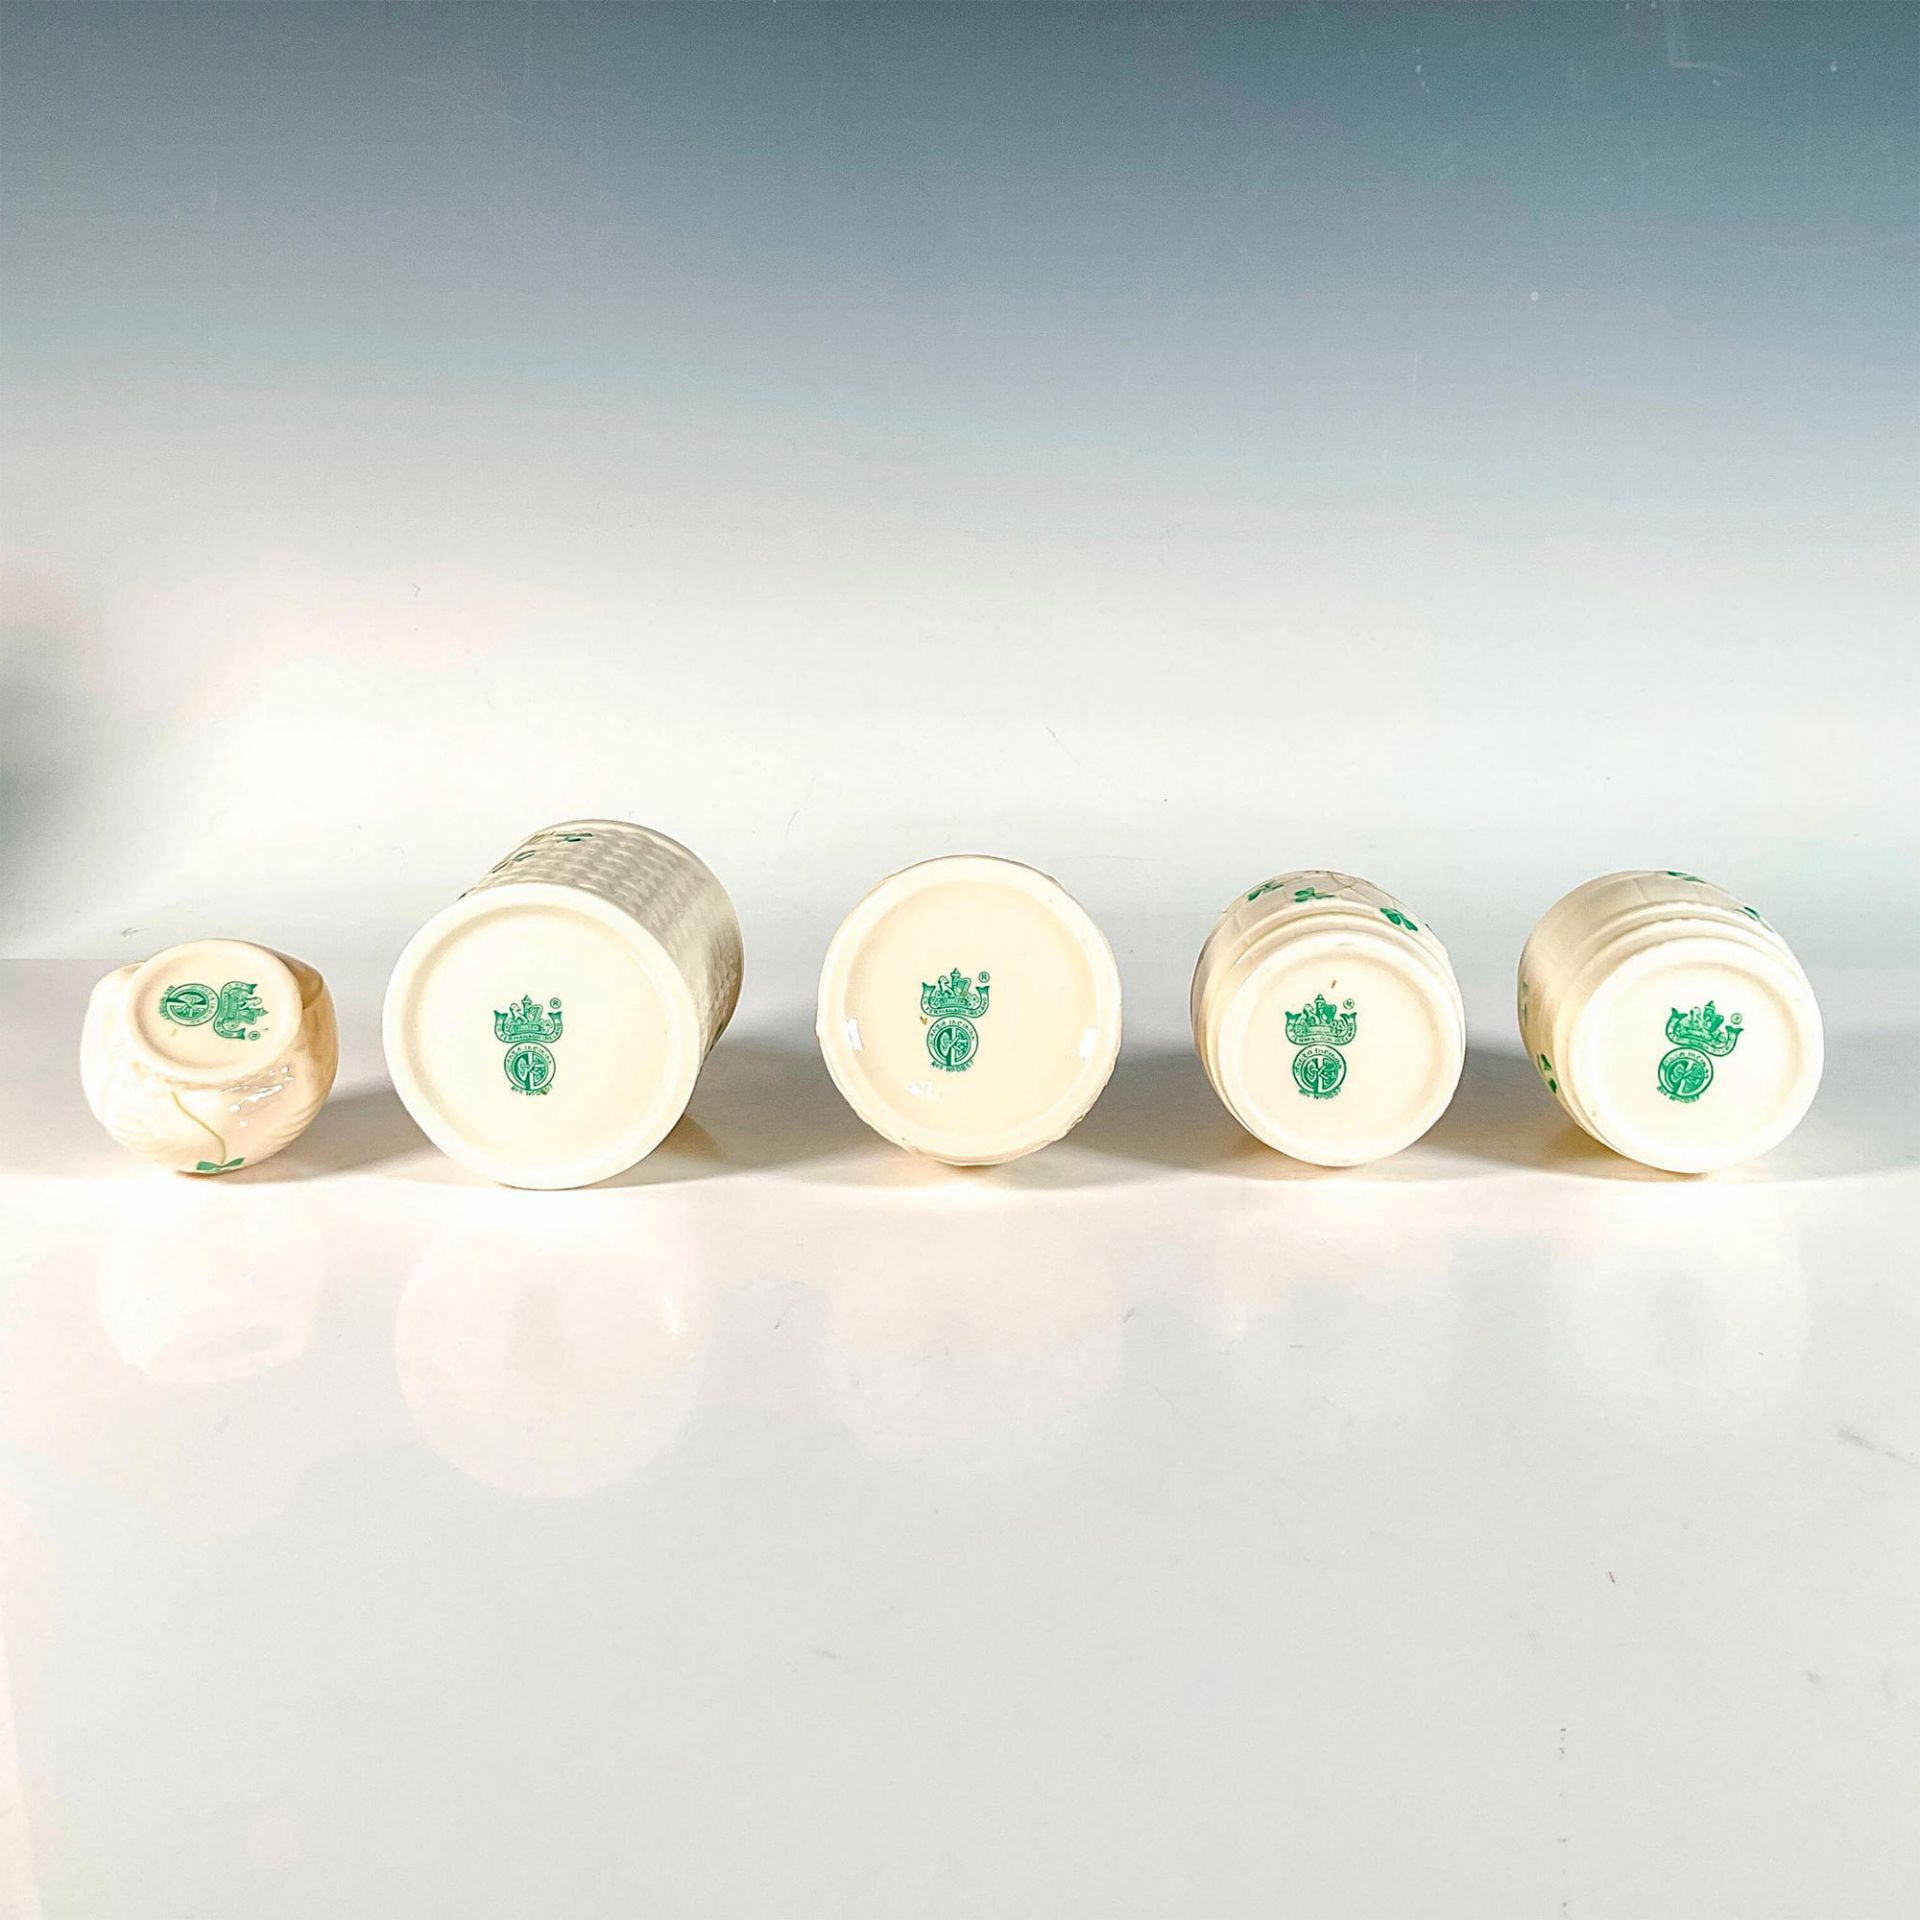 5pc Belleek Porcelain Marmalade Jars, Shamrock - Image 3 of 4